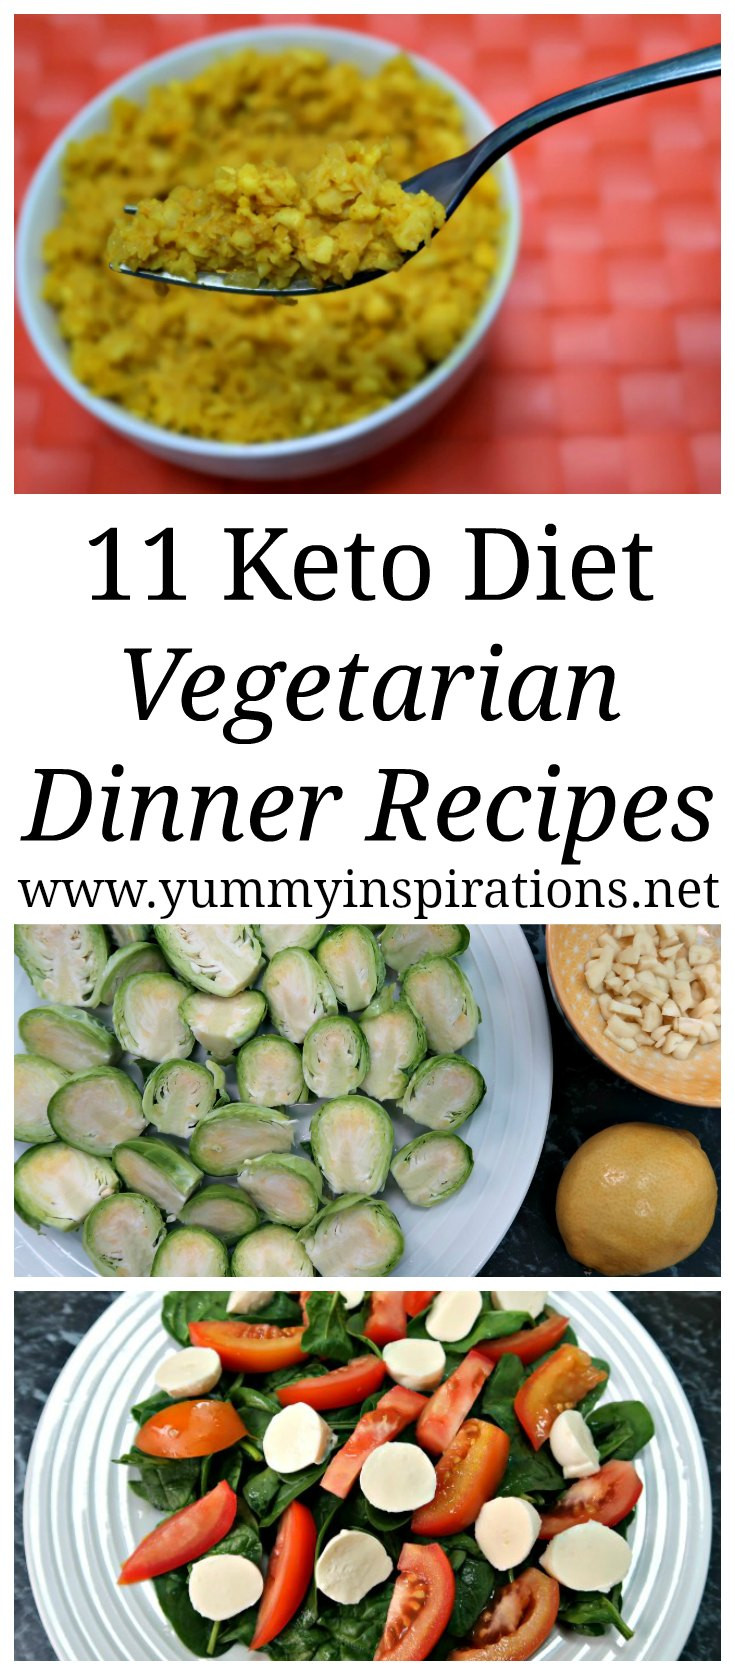 Keto Dinner Recipes Vegetarian
 11 Keto Ve arian Dinner Recipes Easy Low Carb Meal Ideas